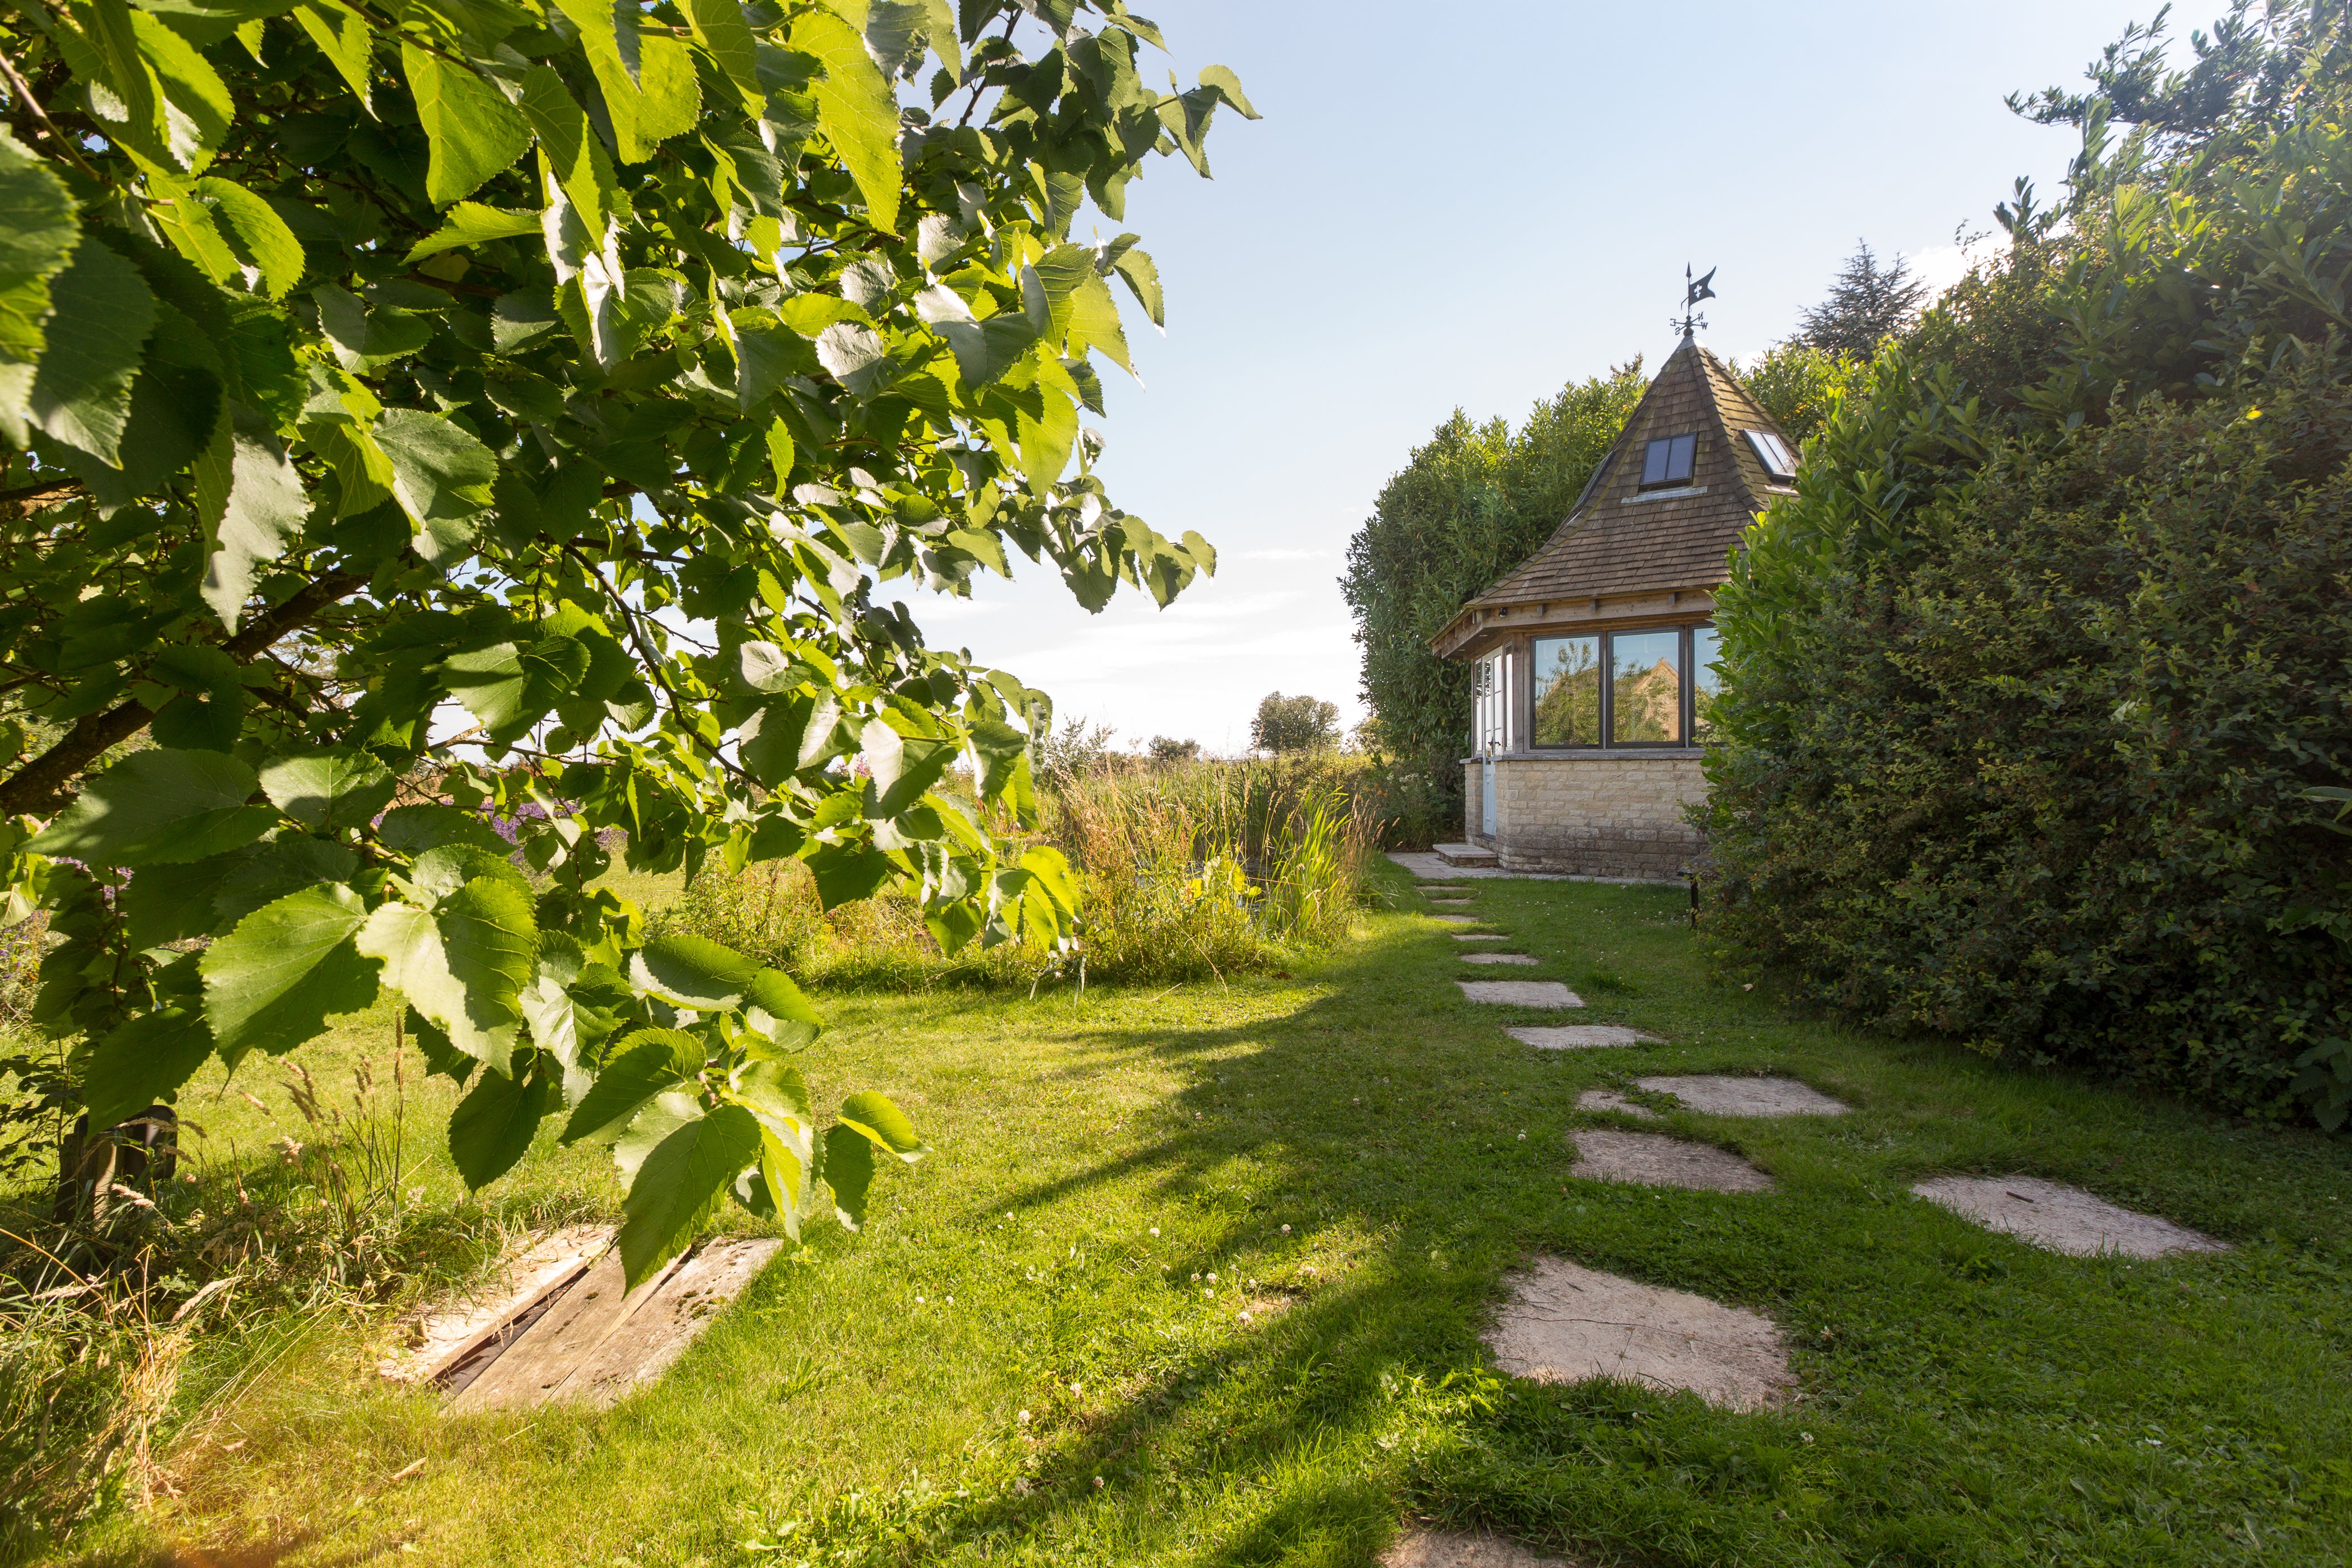 Go off-grid at Summerhill Farm’s tiny garden retreat